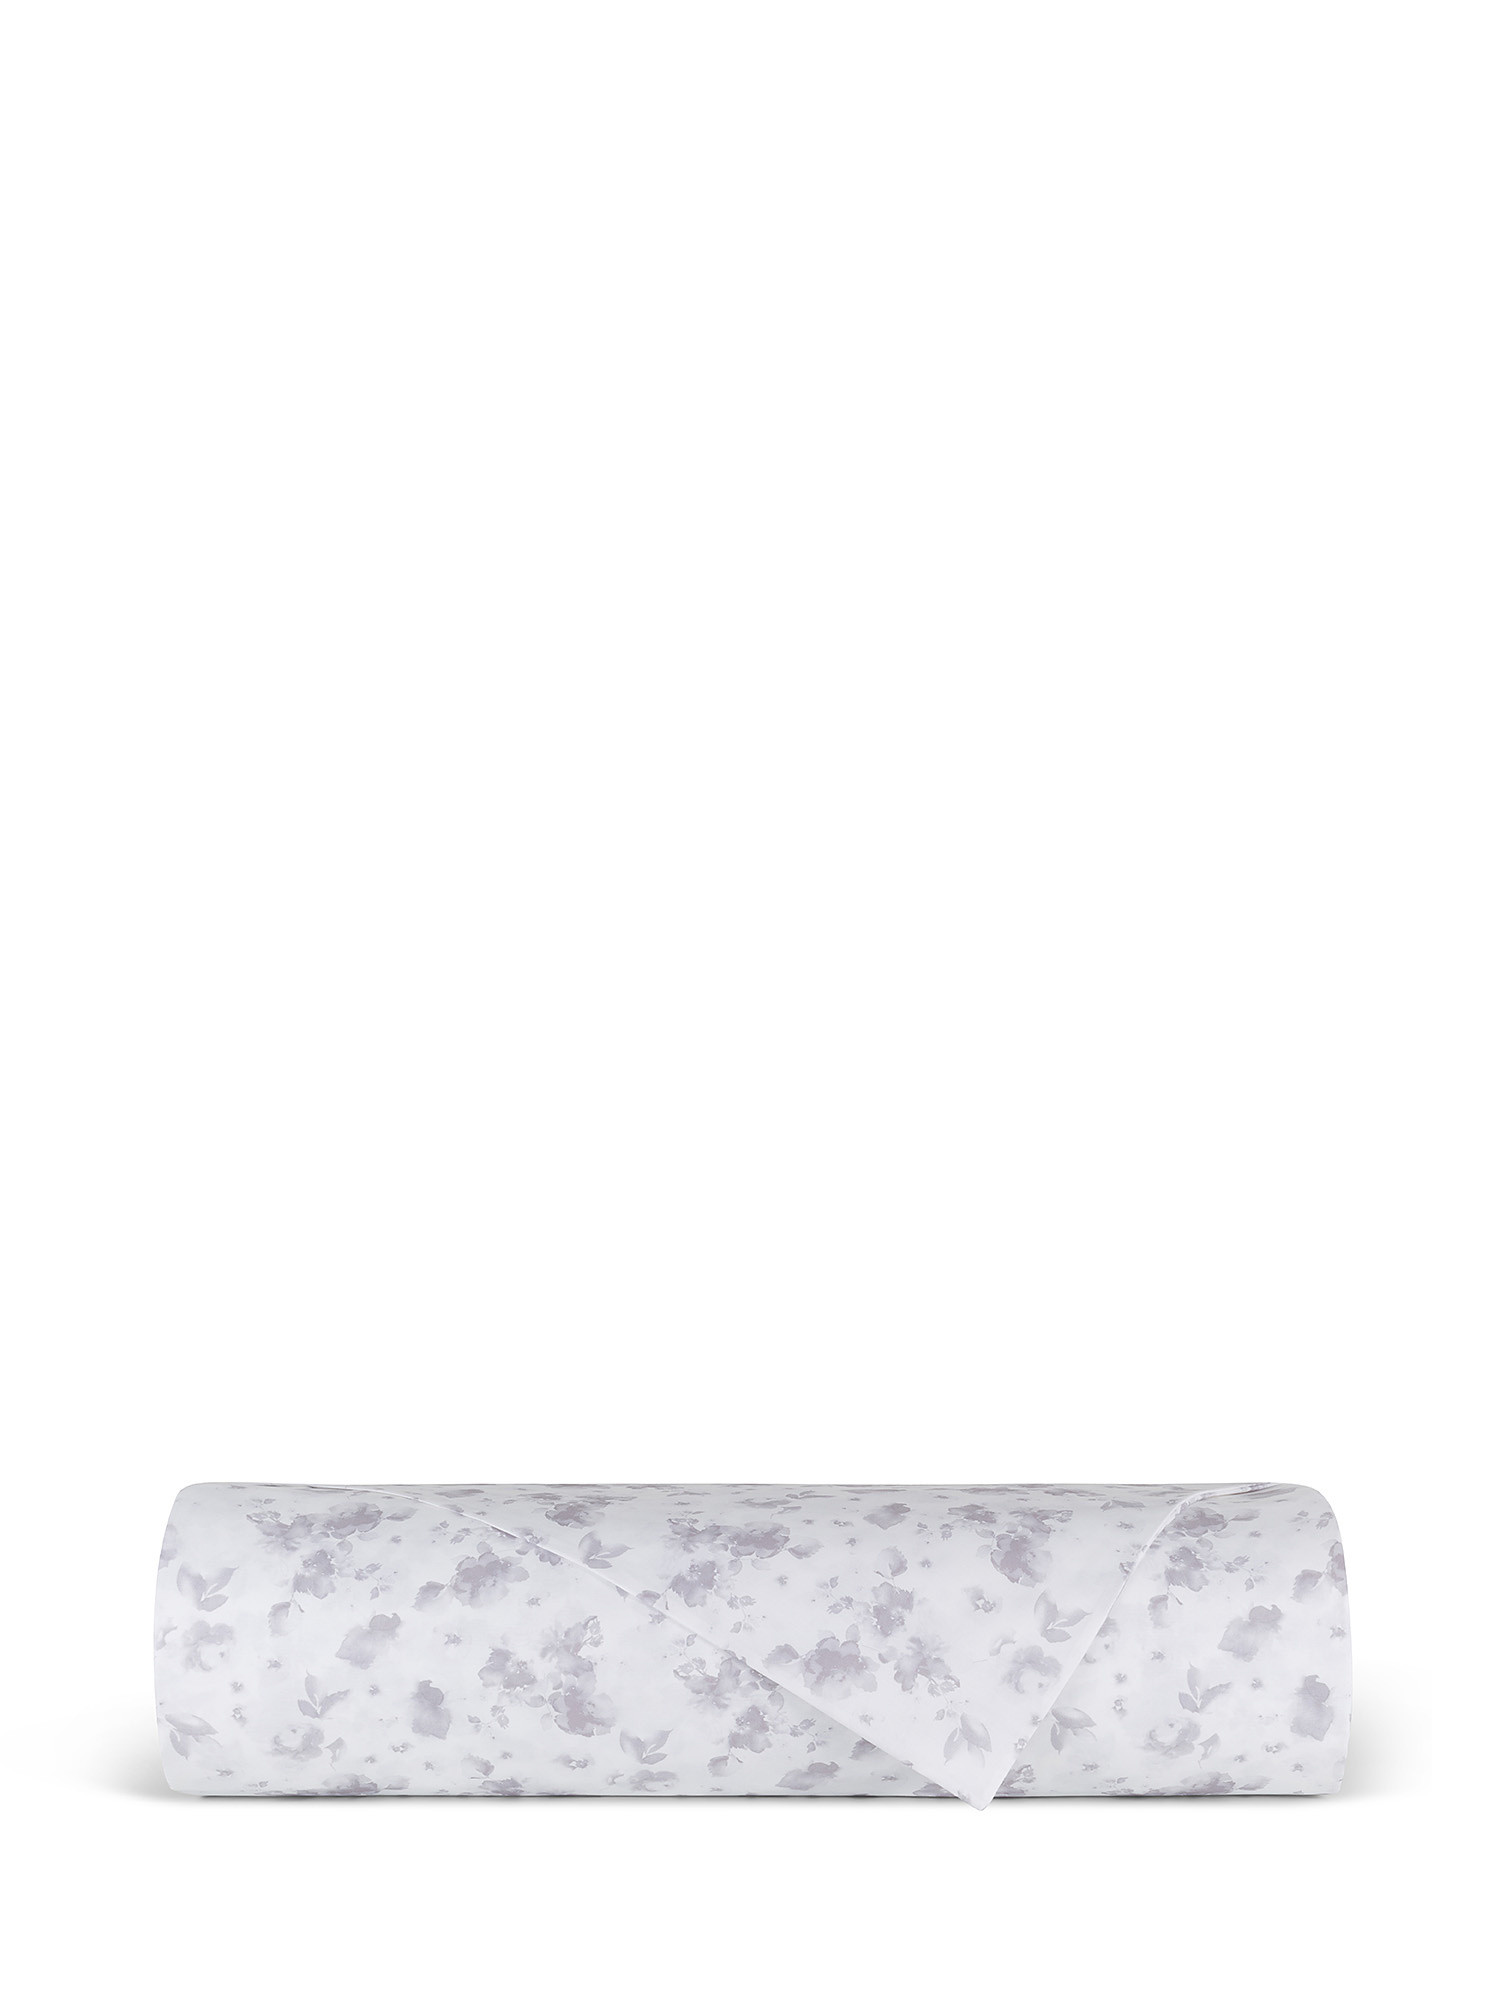 Lenzuolo liscio cotone percalle motivo floreale Portofino, Bianco, large image number 1